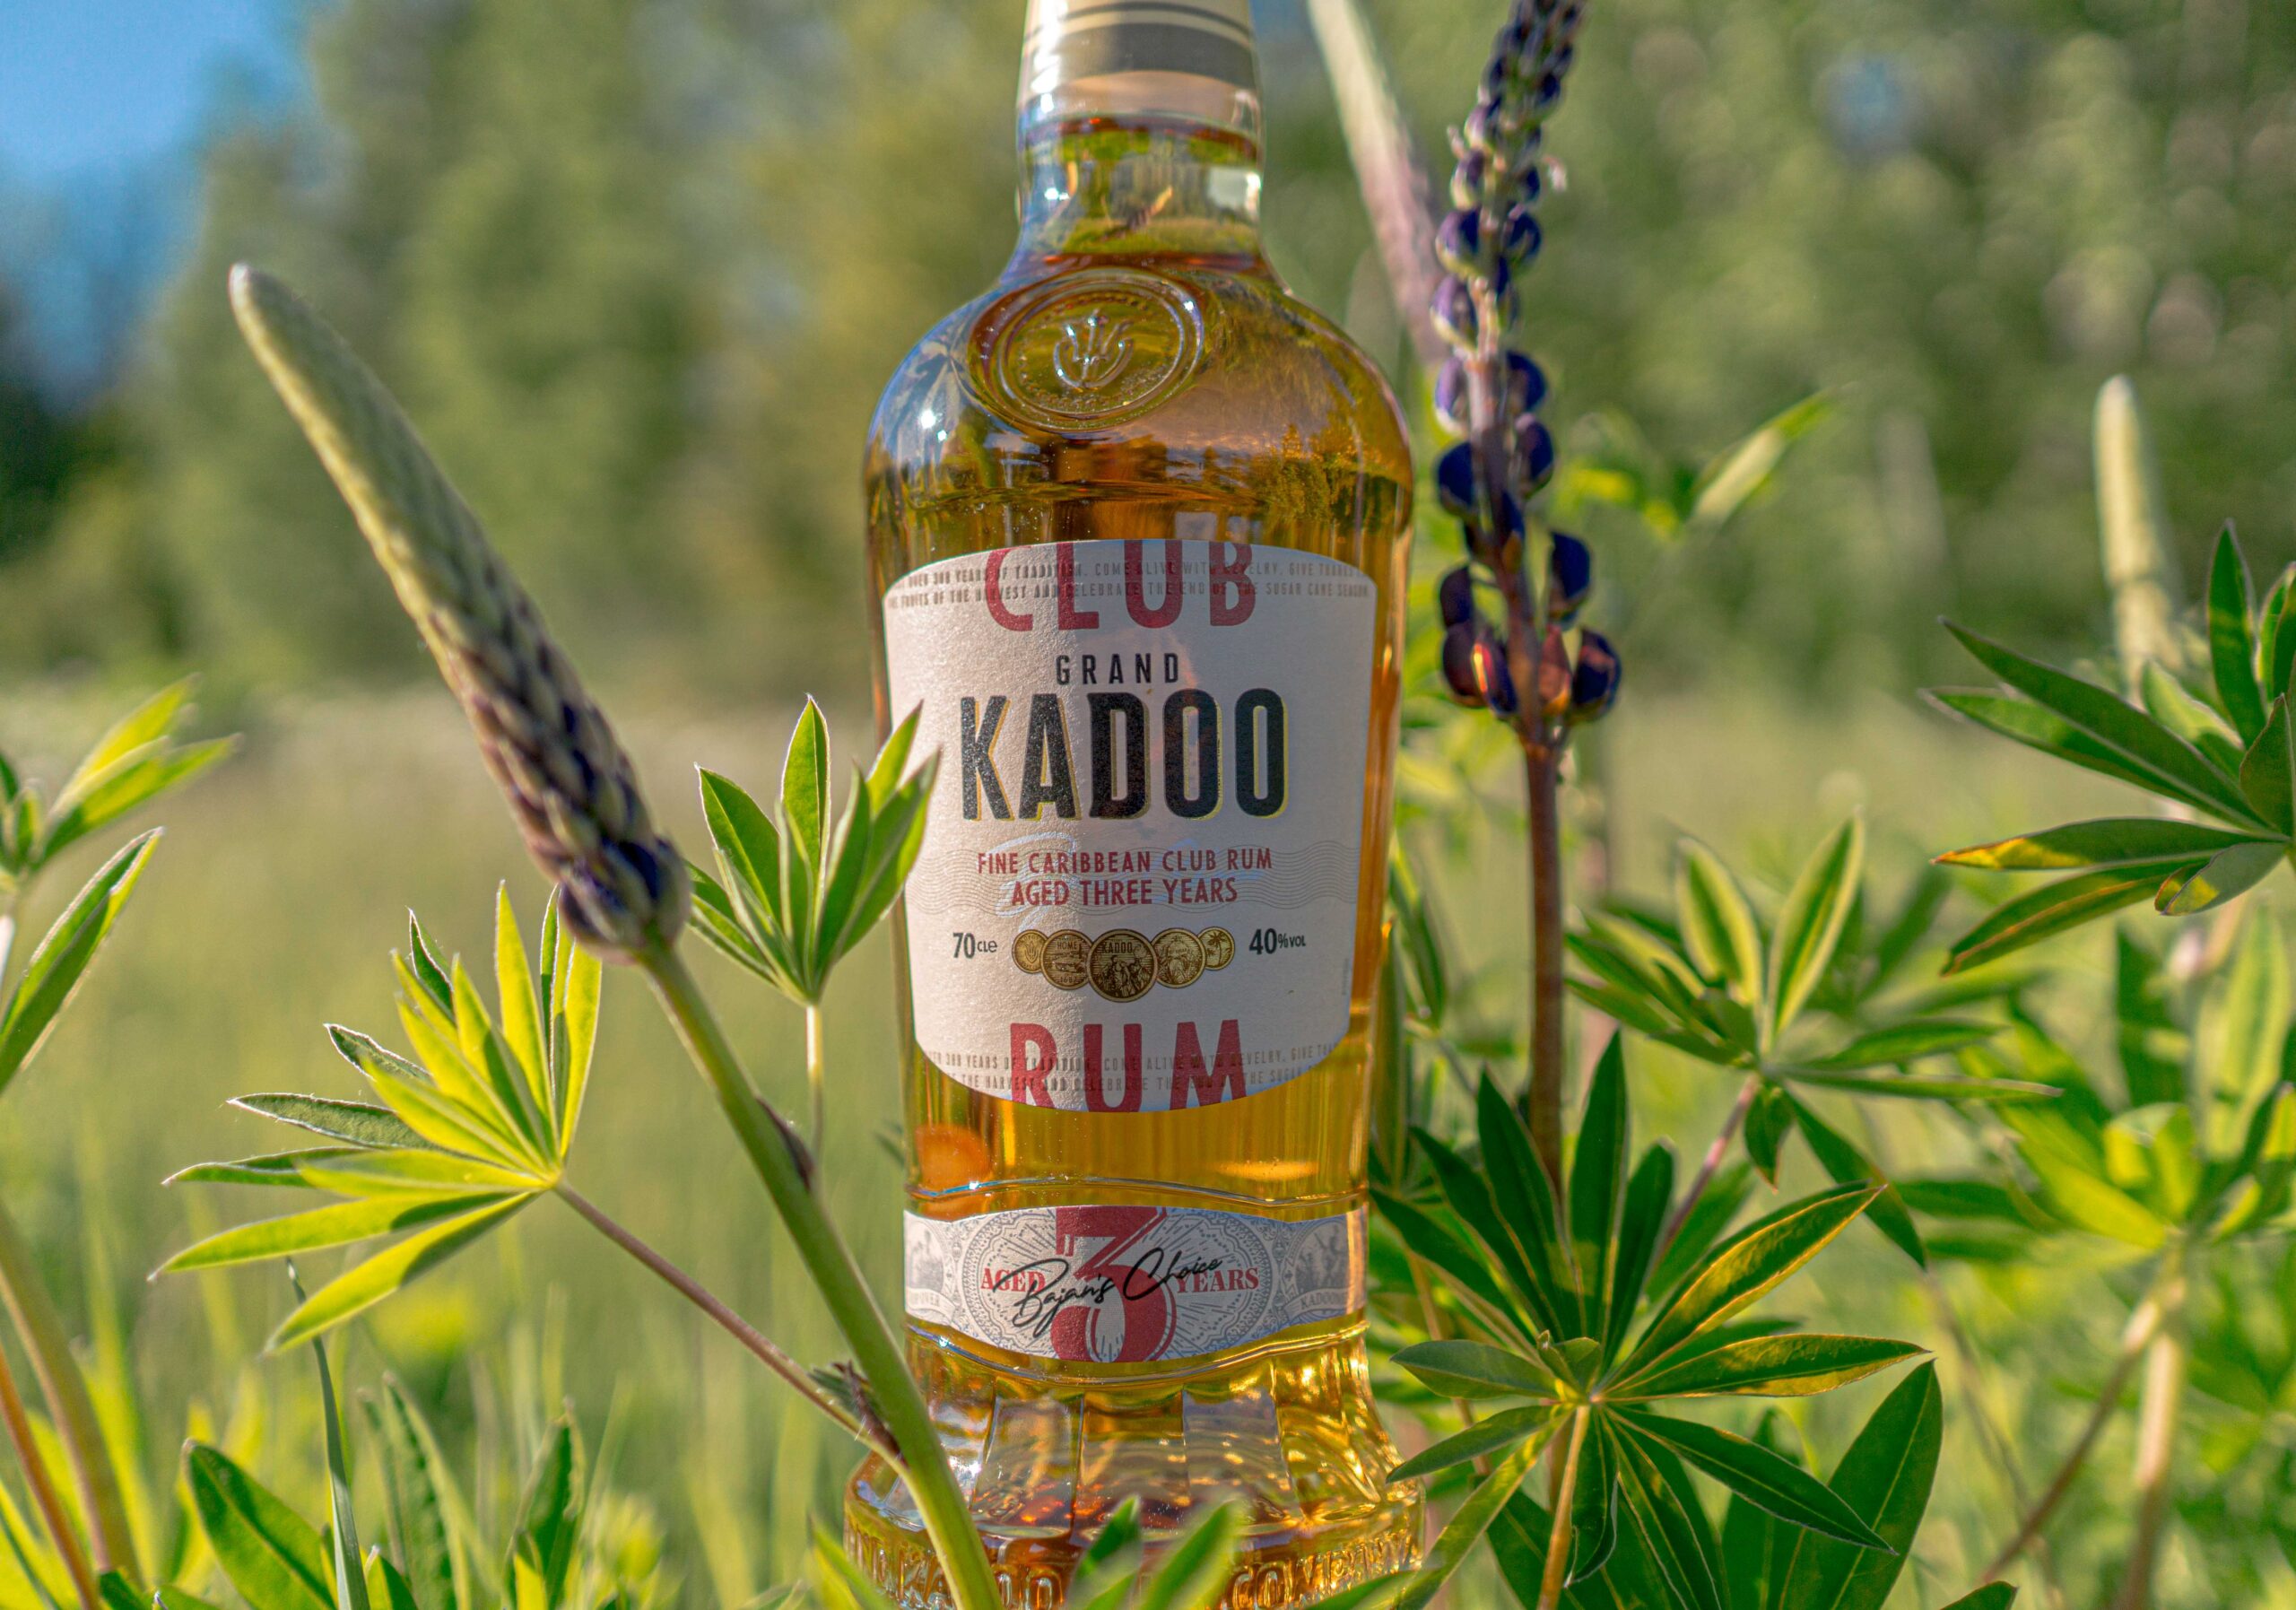 Grand Kadoo rum 3 years old